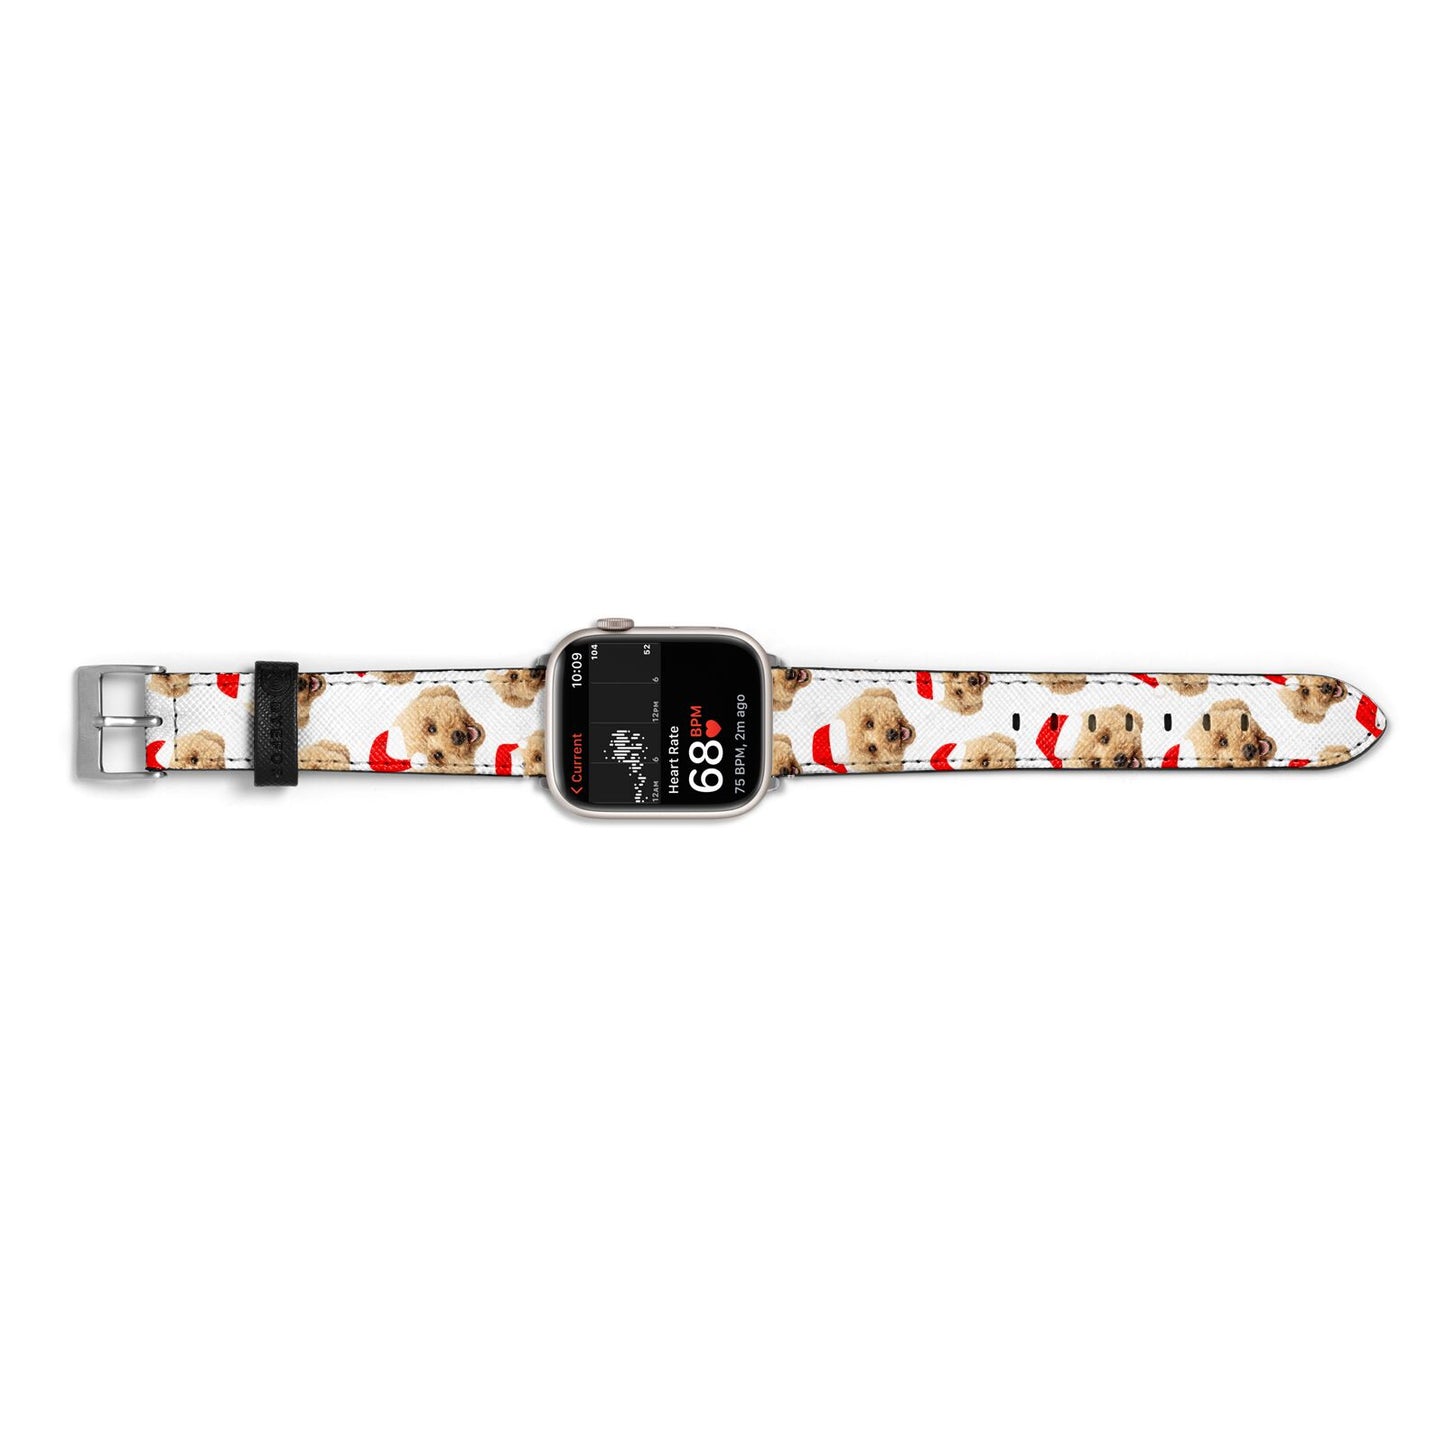 Christmas Dog Apple Watch Strap Size 38mm Landscape Image Silver Hardware